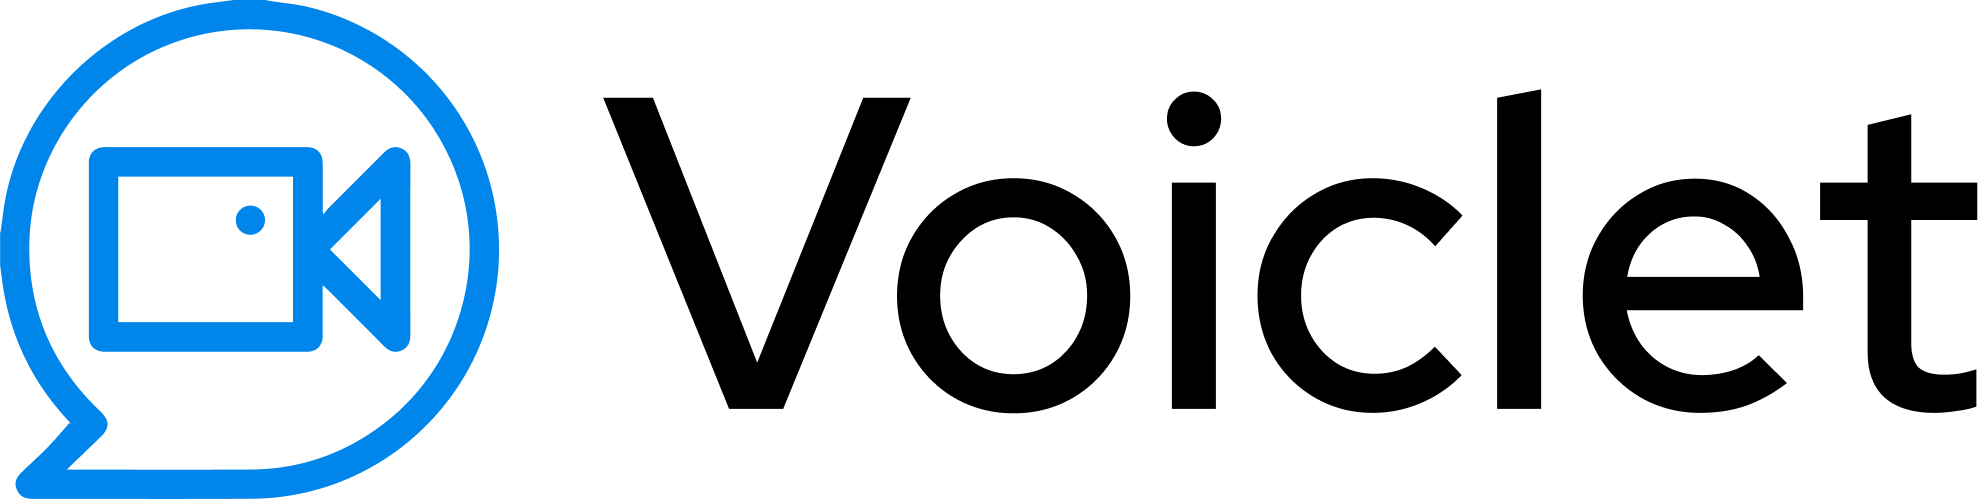 Voiclet logo